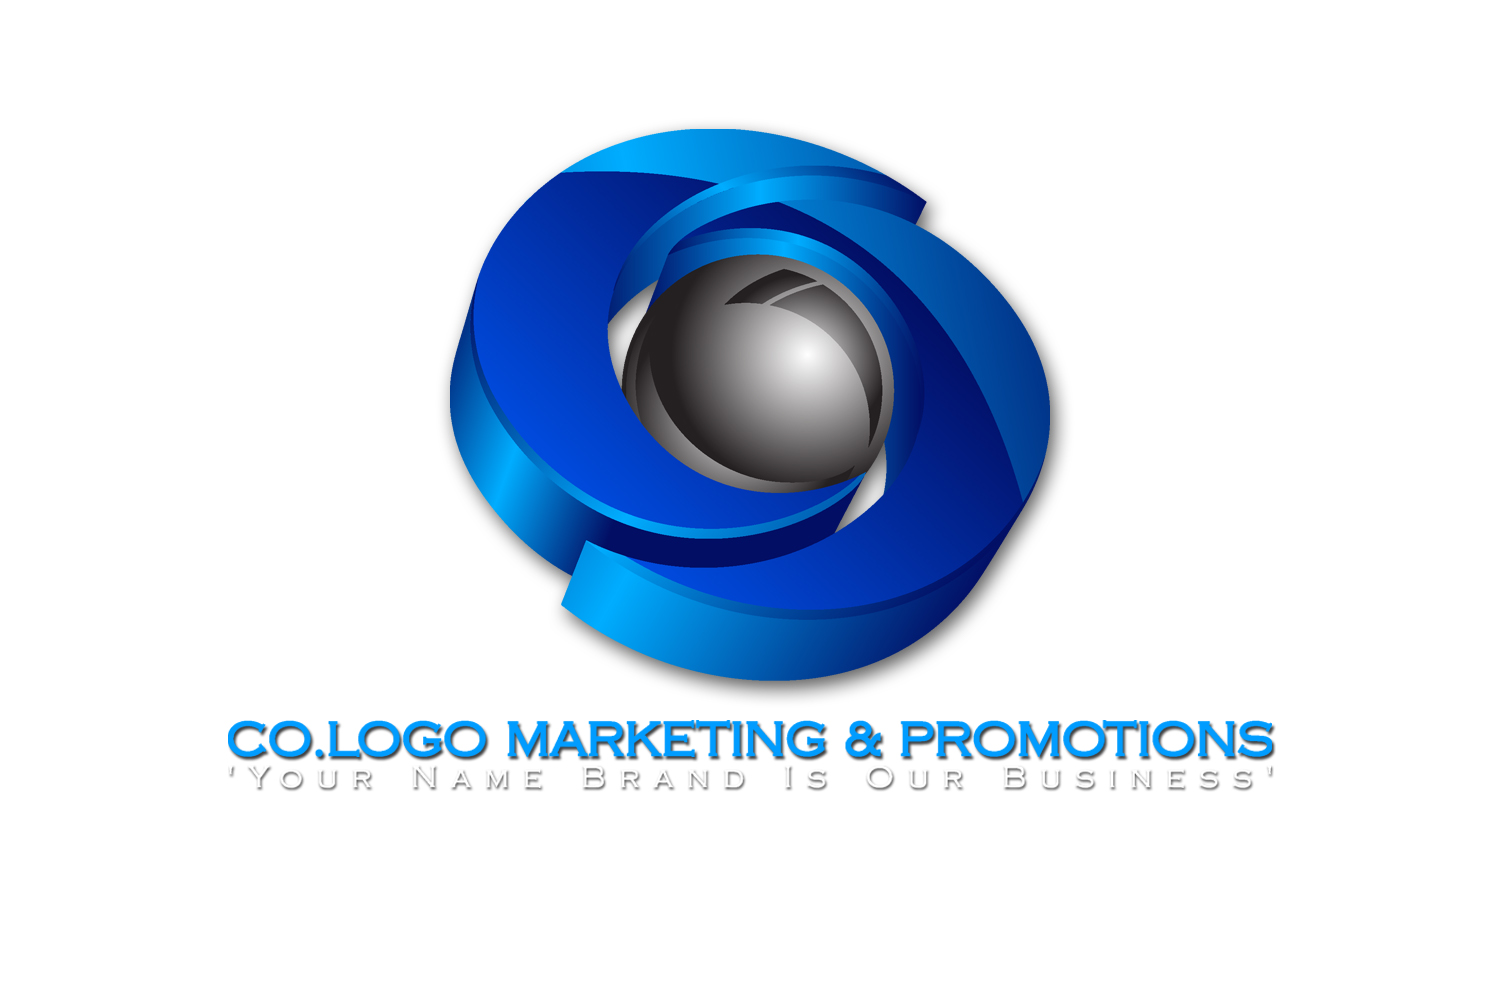 Co. Logo Promotional Products Inc's Logo